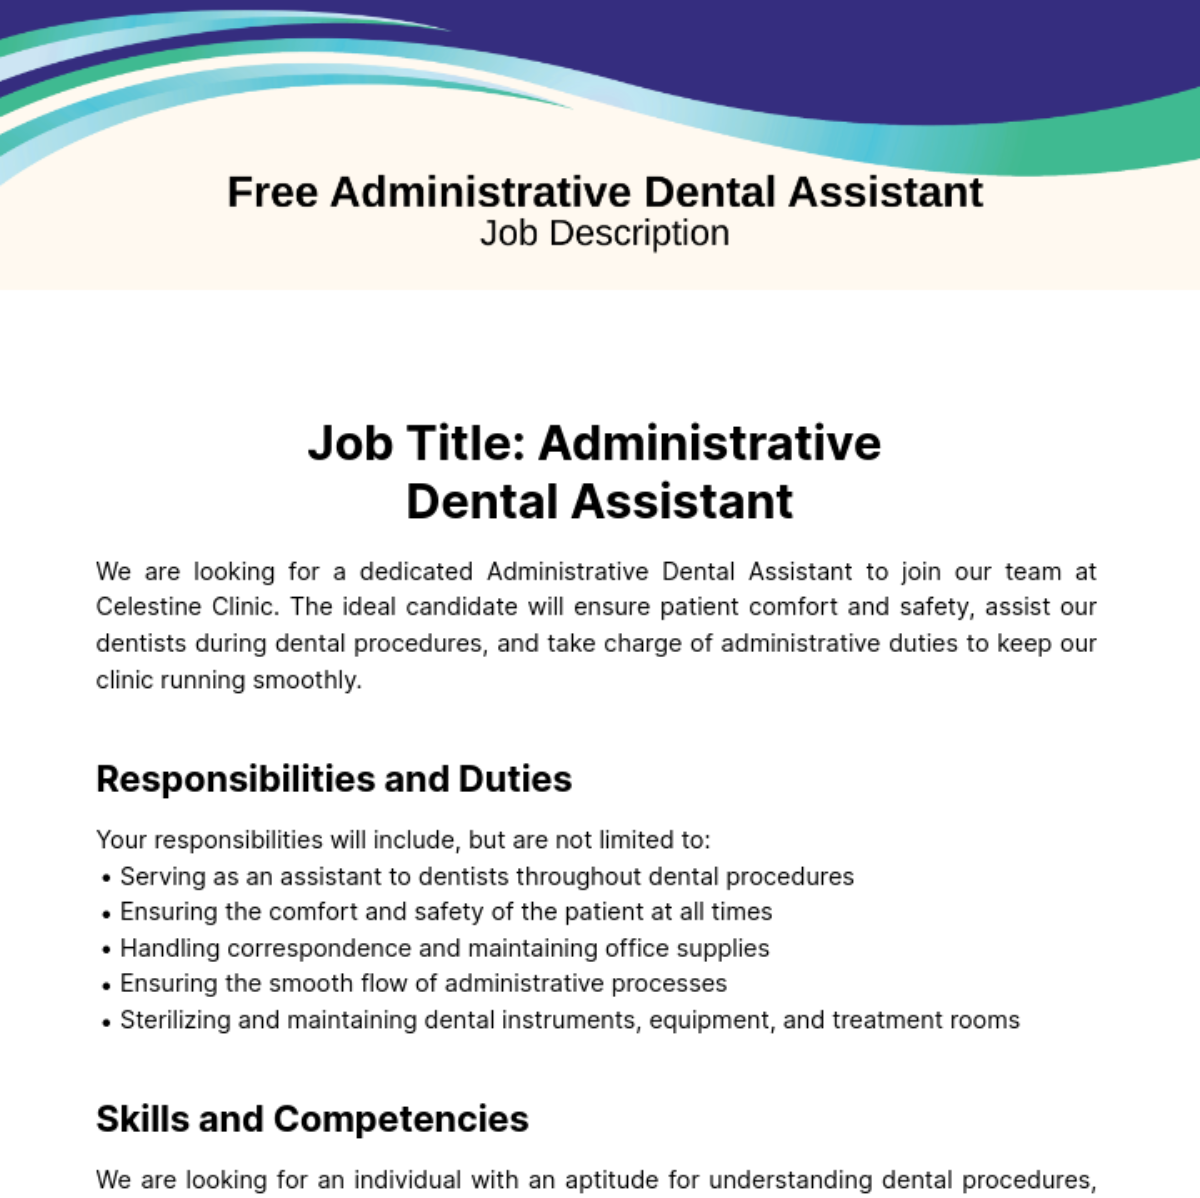 Free Administrative Dental Assistant Job Description Template